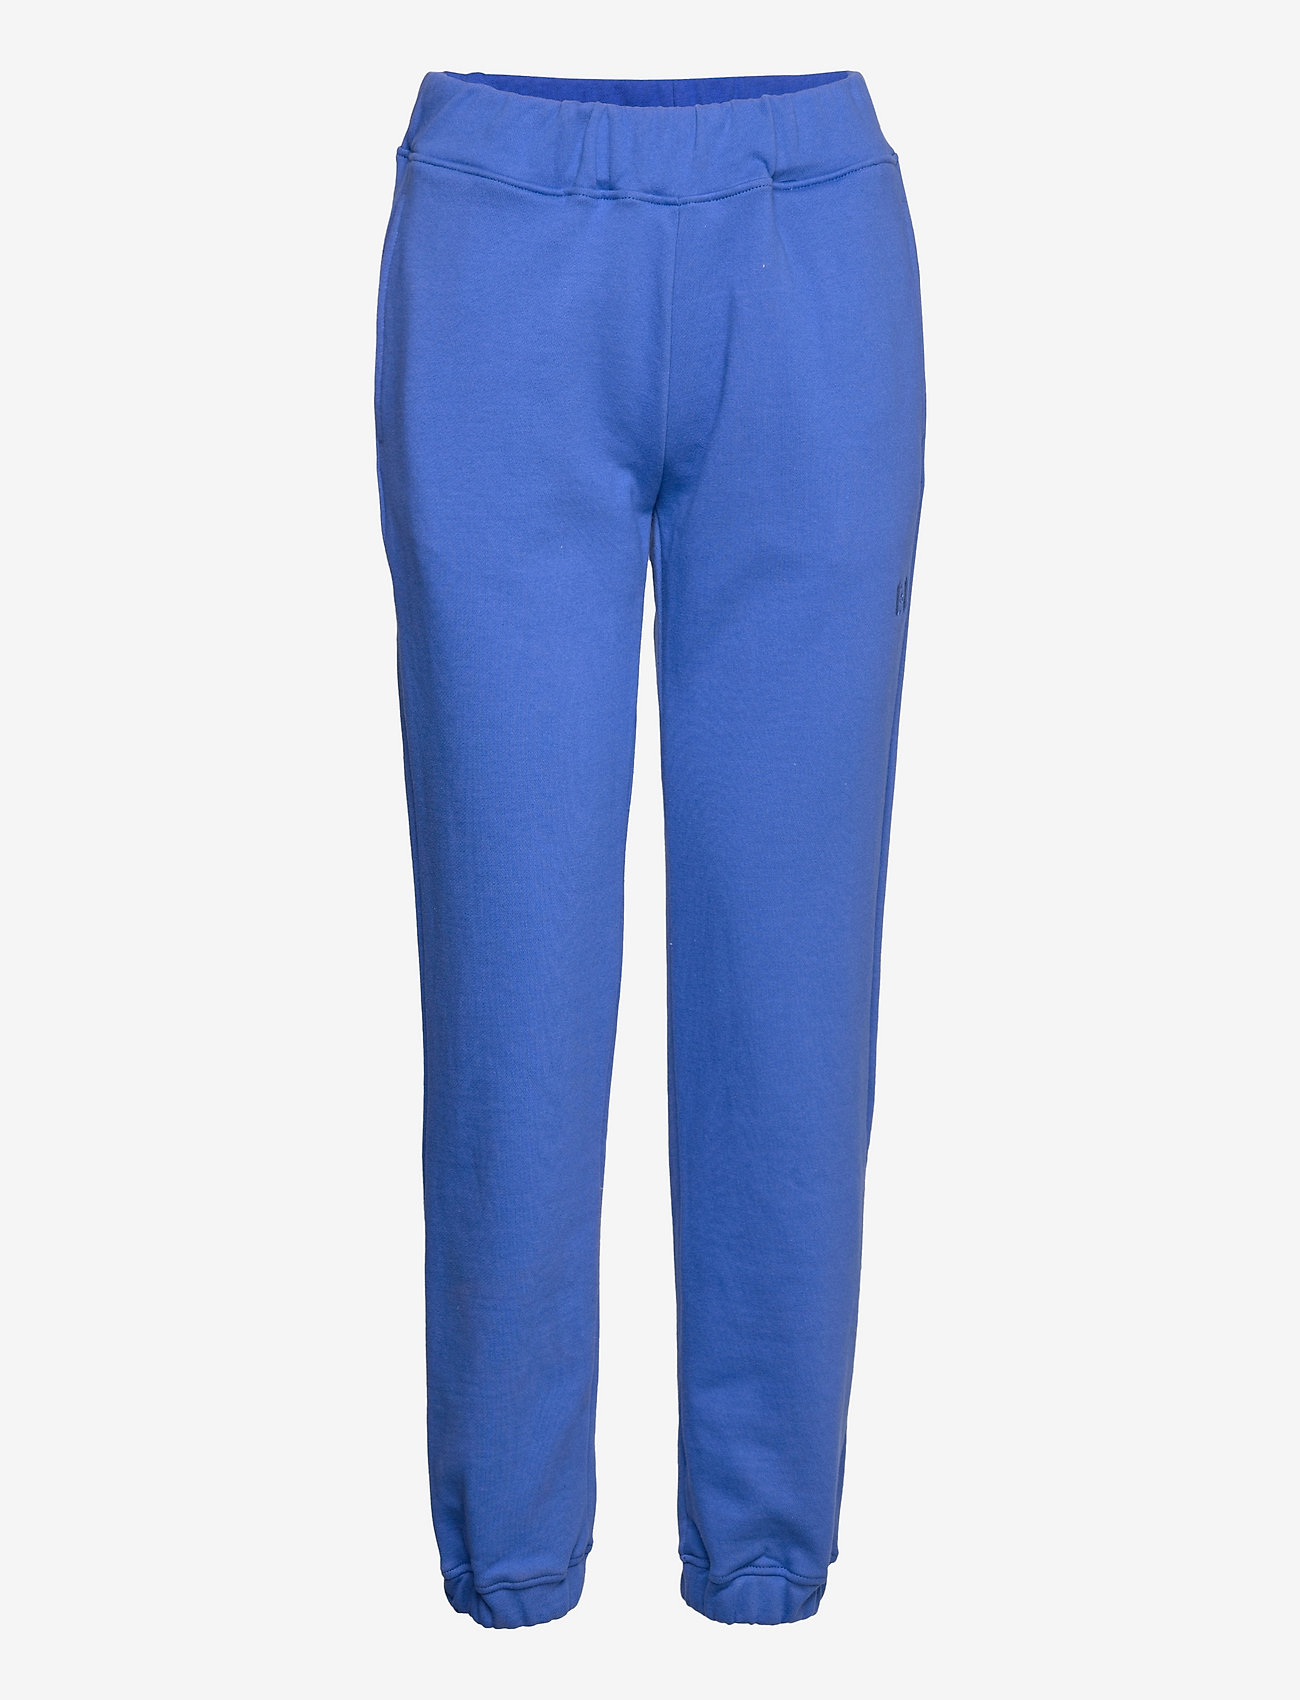 Twist & Tango - Tama Trousers - sweatpants - cobalt blue - 0